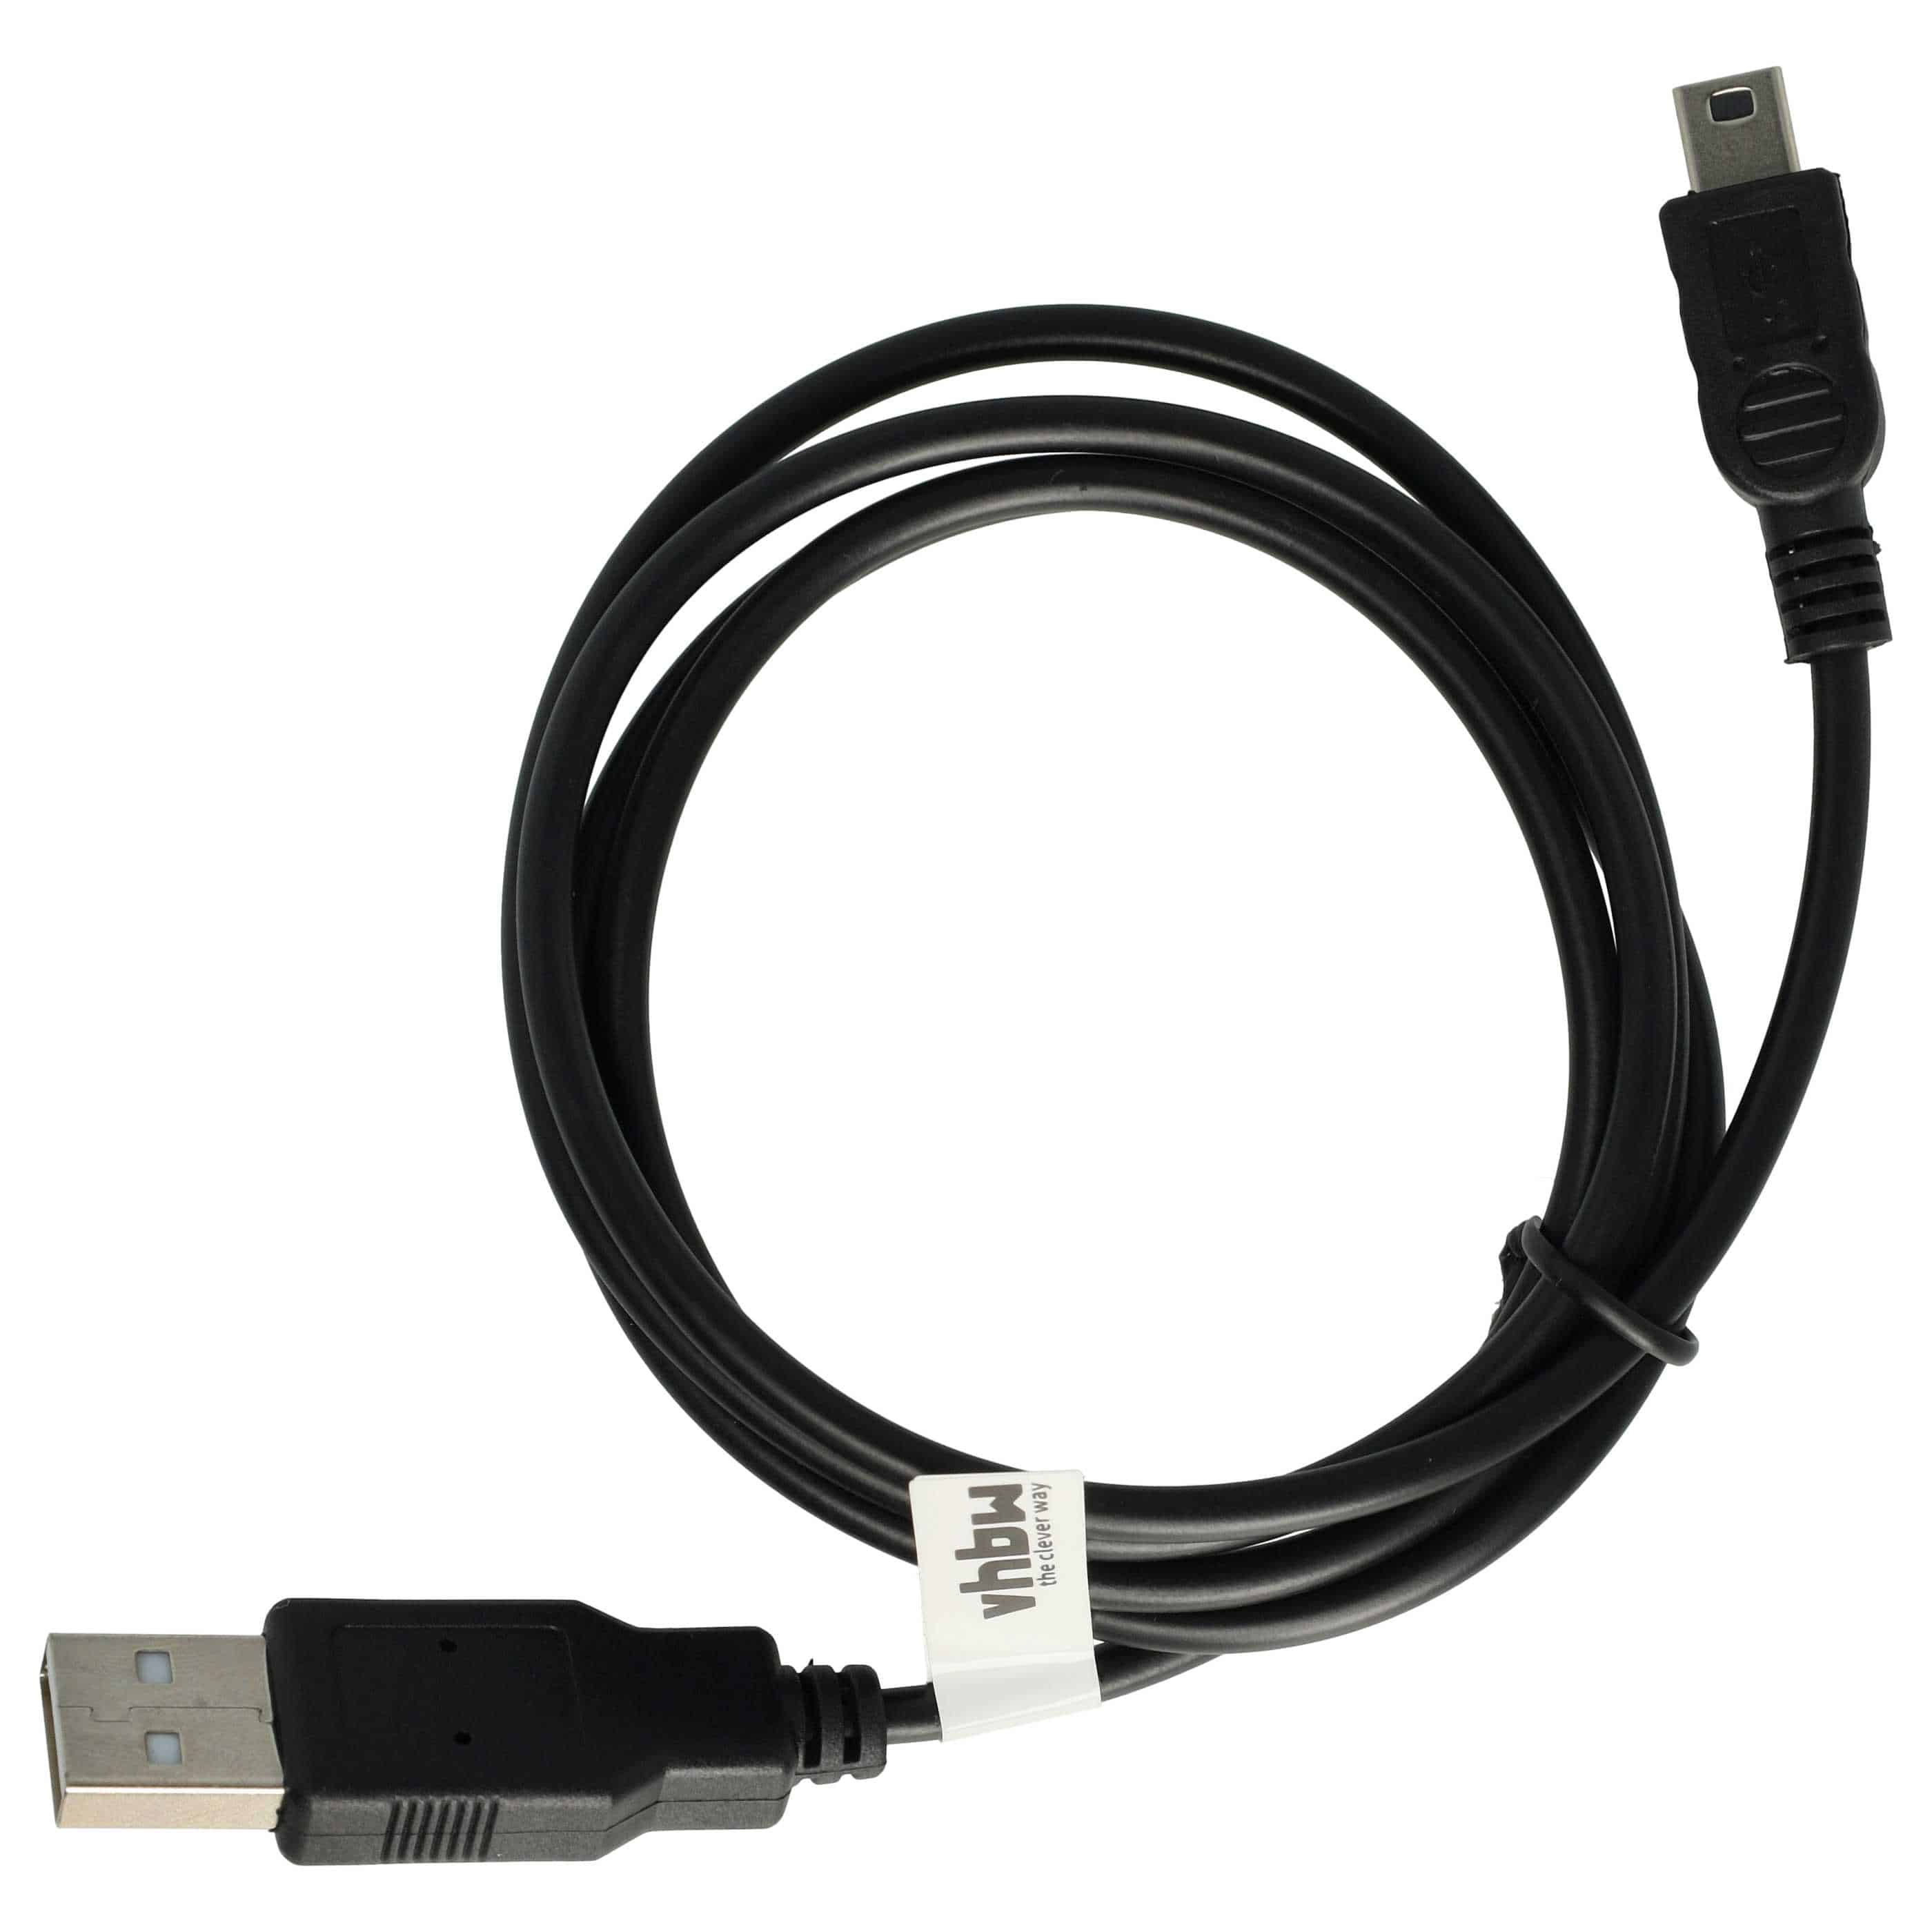 Cable de datos USB para cámaras Belkin, etc. - 100 cm